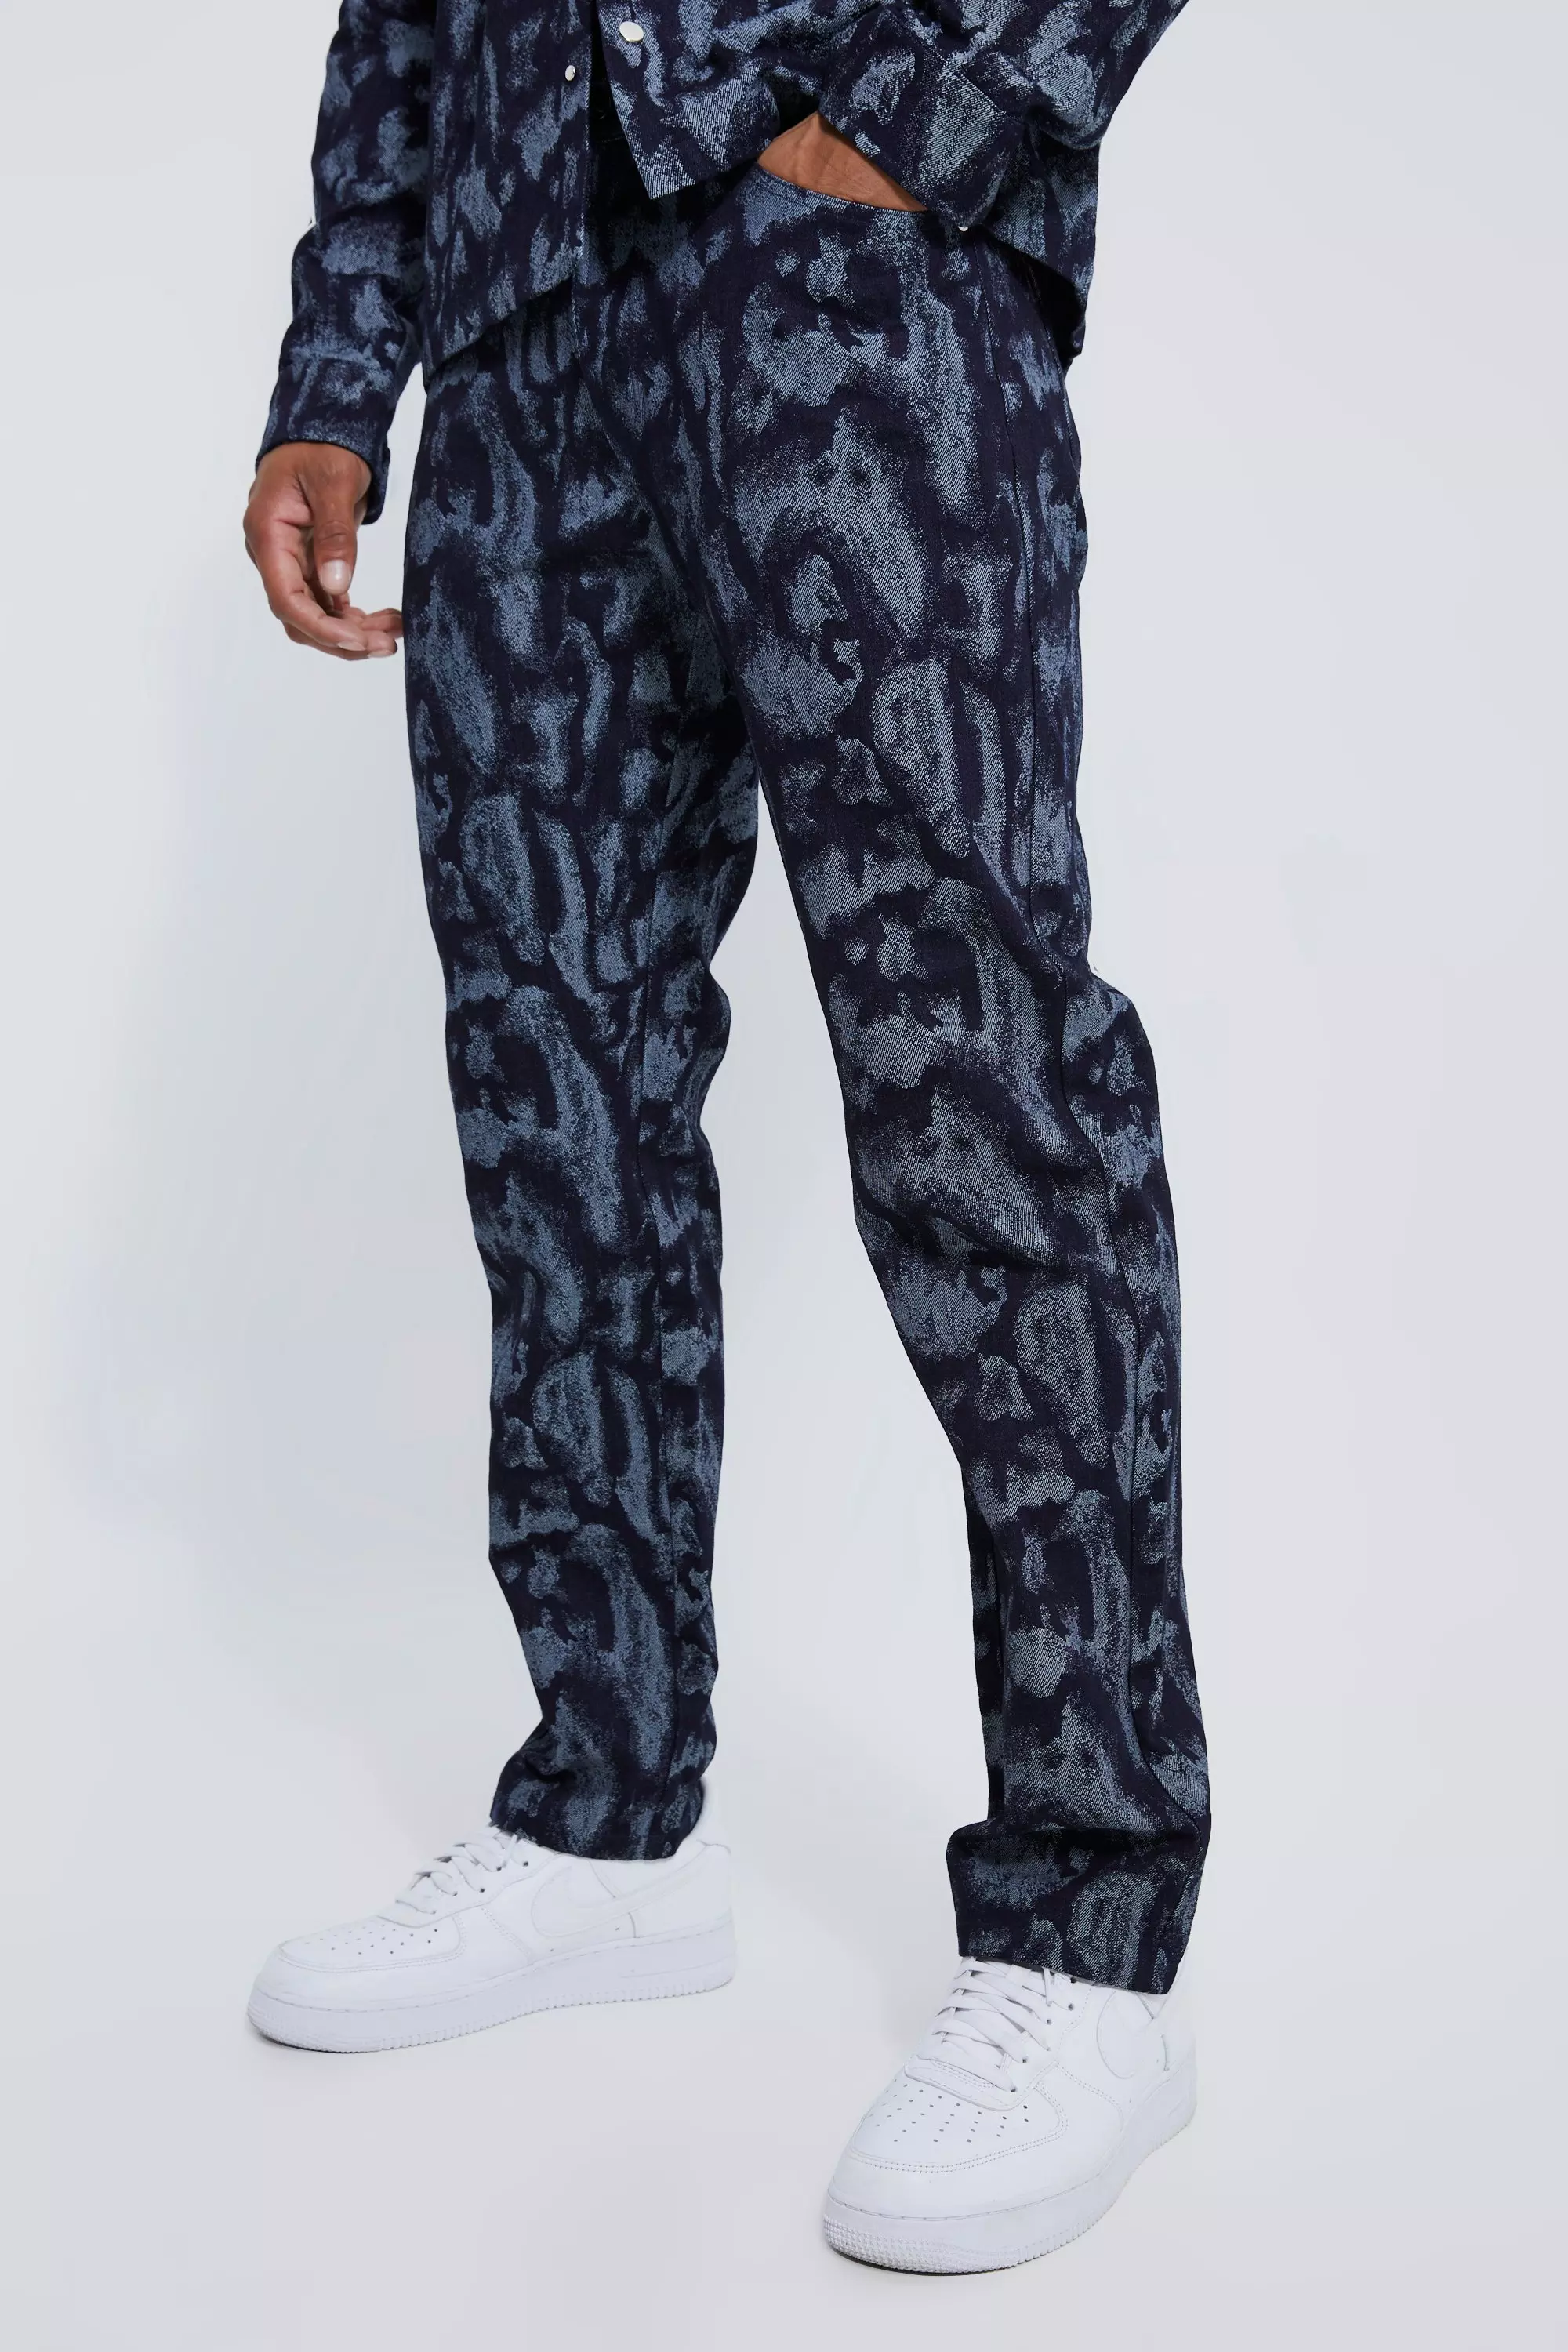 Dark Gray Louis Vuitton Fabric look like denim / jeans